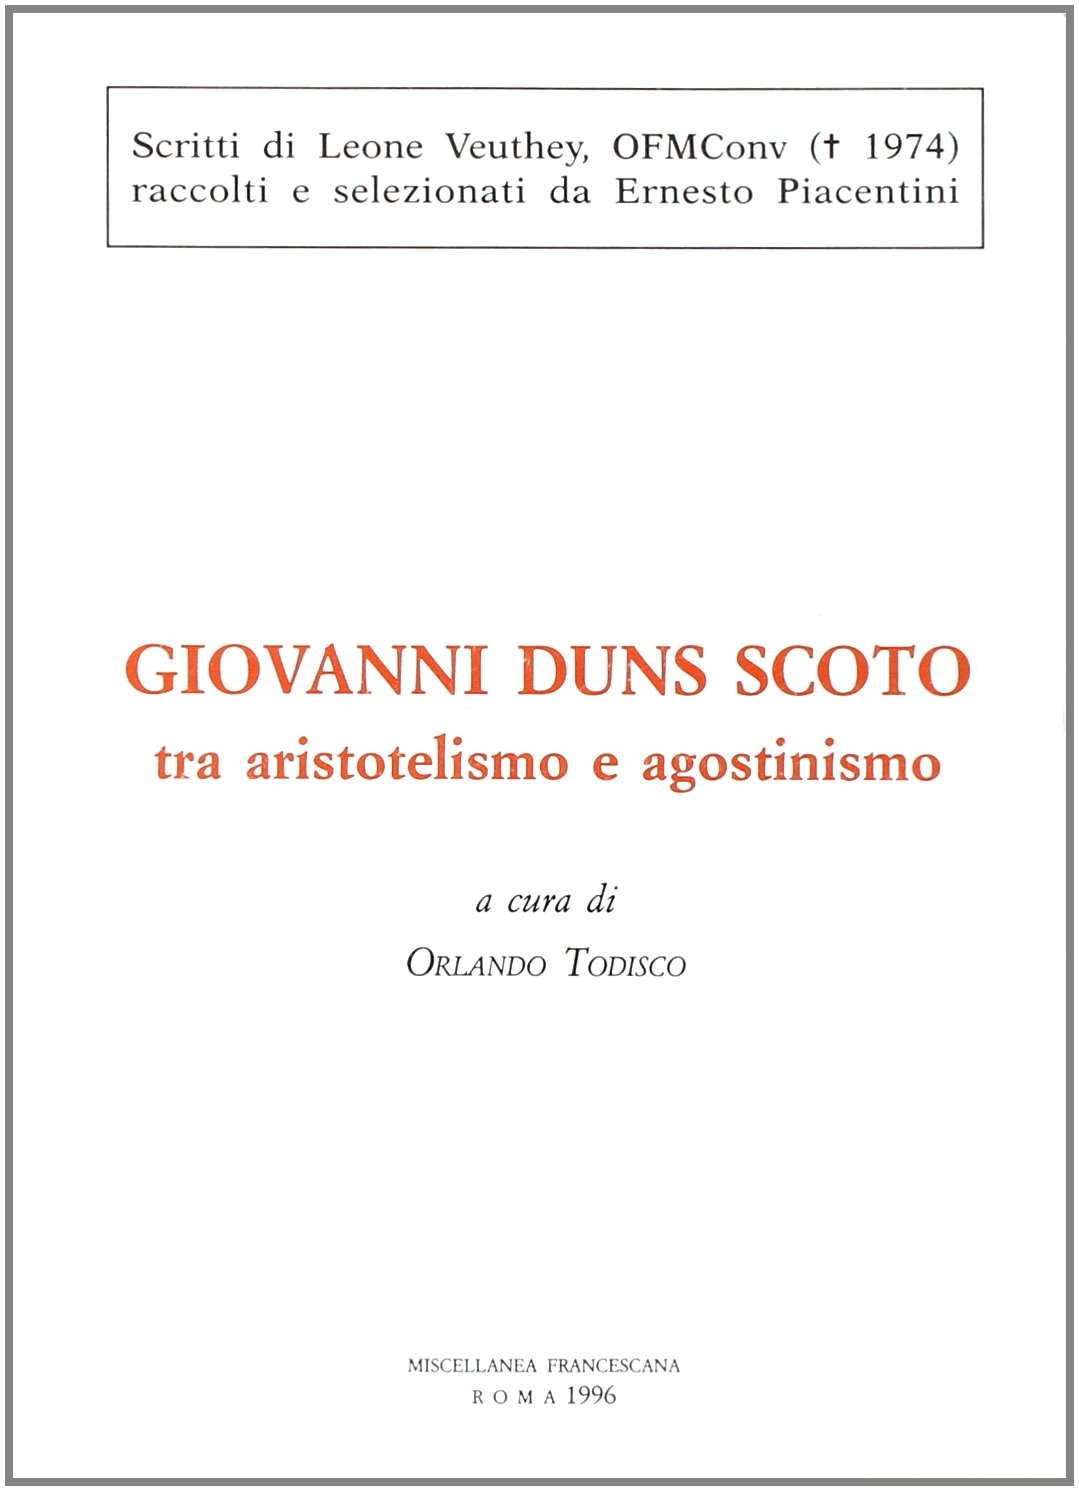 Giovanni Duns Scoto tra aristotelismo e agostinismo - [Miscellanea Francescana] - Zdjęcie 1 z 1